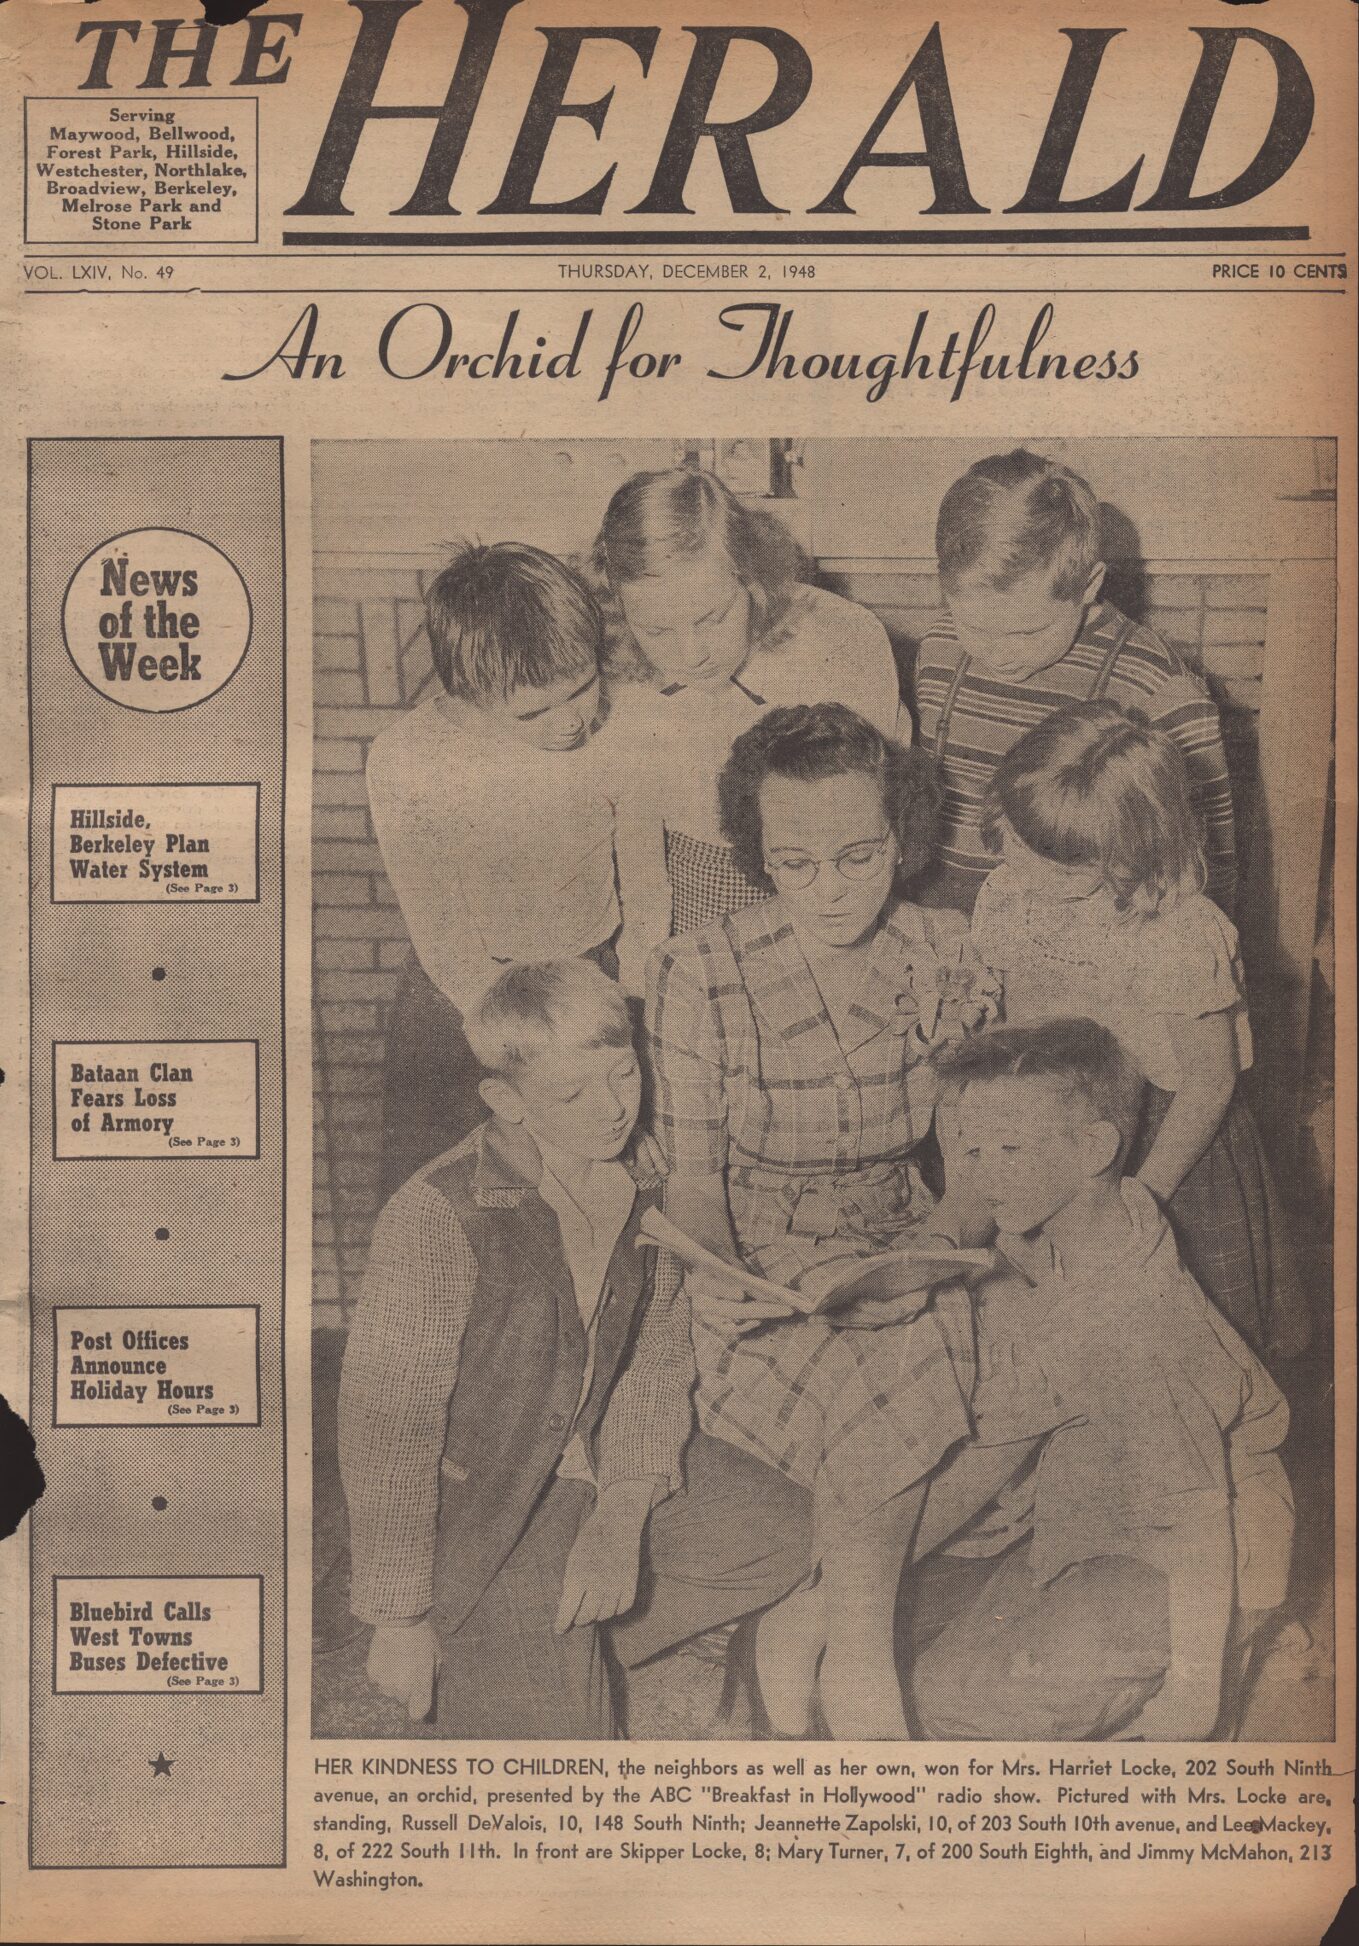 The Herald – 19481202